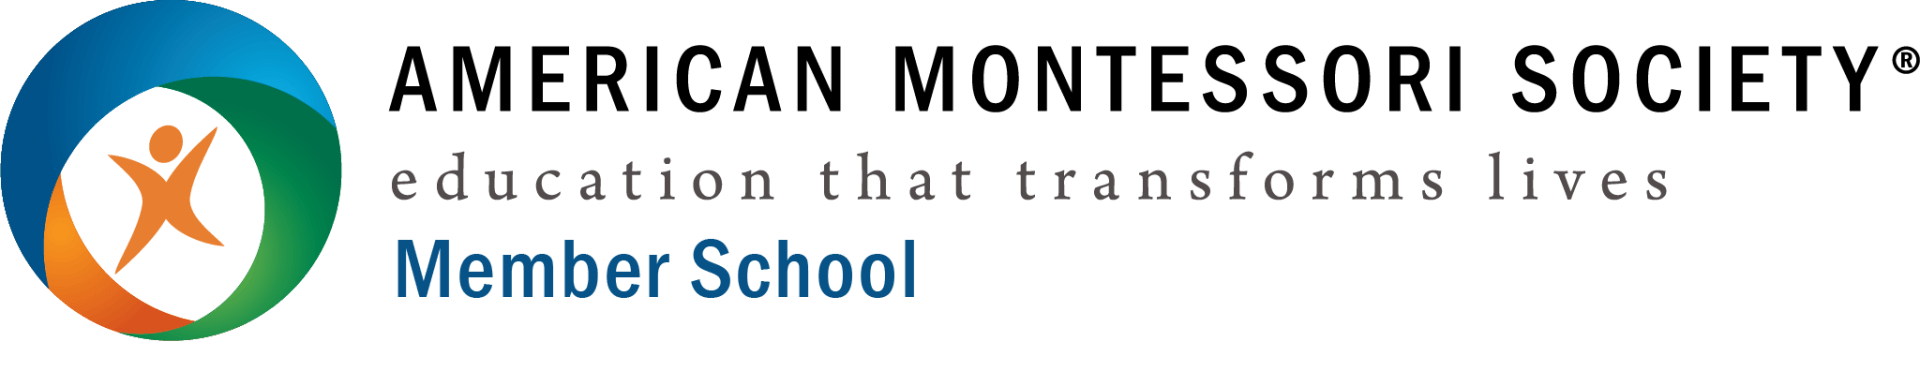 American Montessori Society Member School